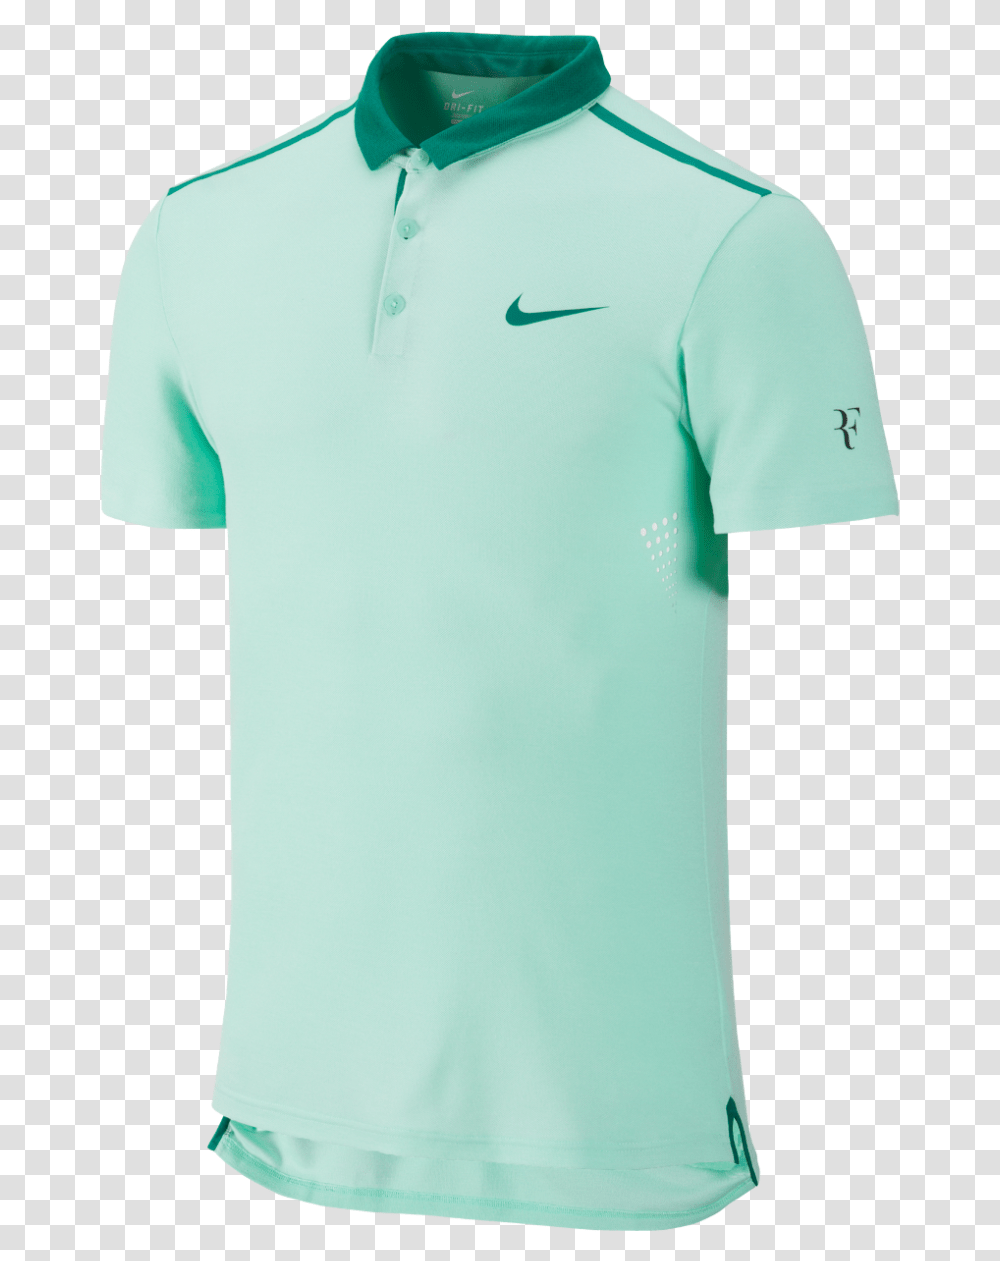 Polo Shirt Image Background Polo Shirt, Apparel, T-Shirt, Sleeve Transparent Png